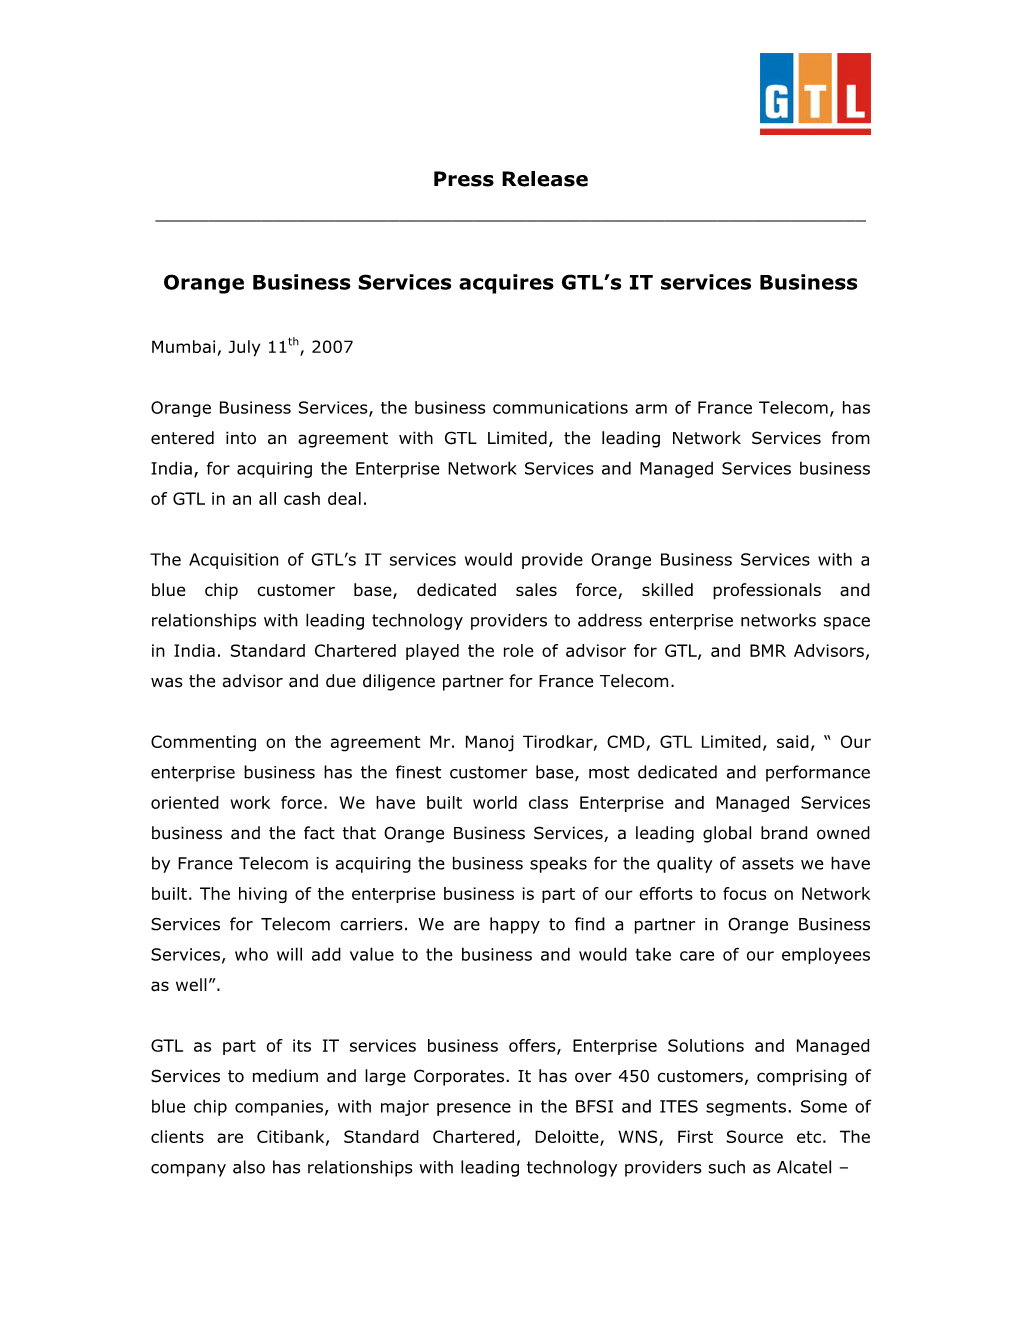 Press Release : Orange Business Services Acquires